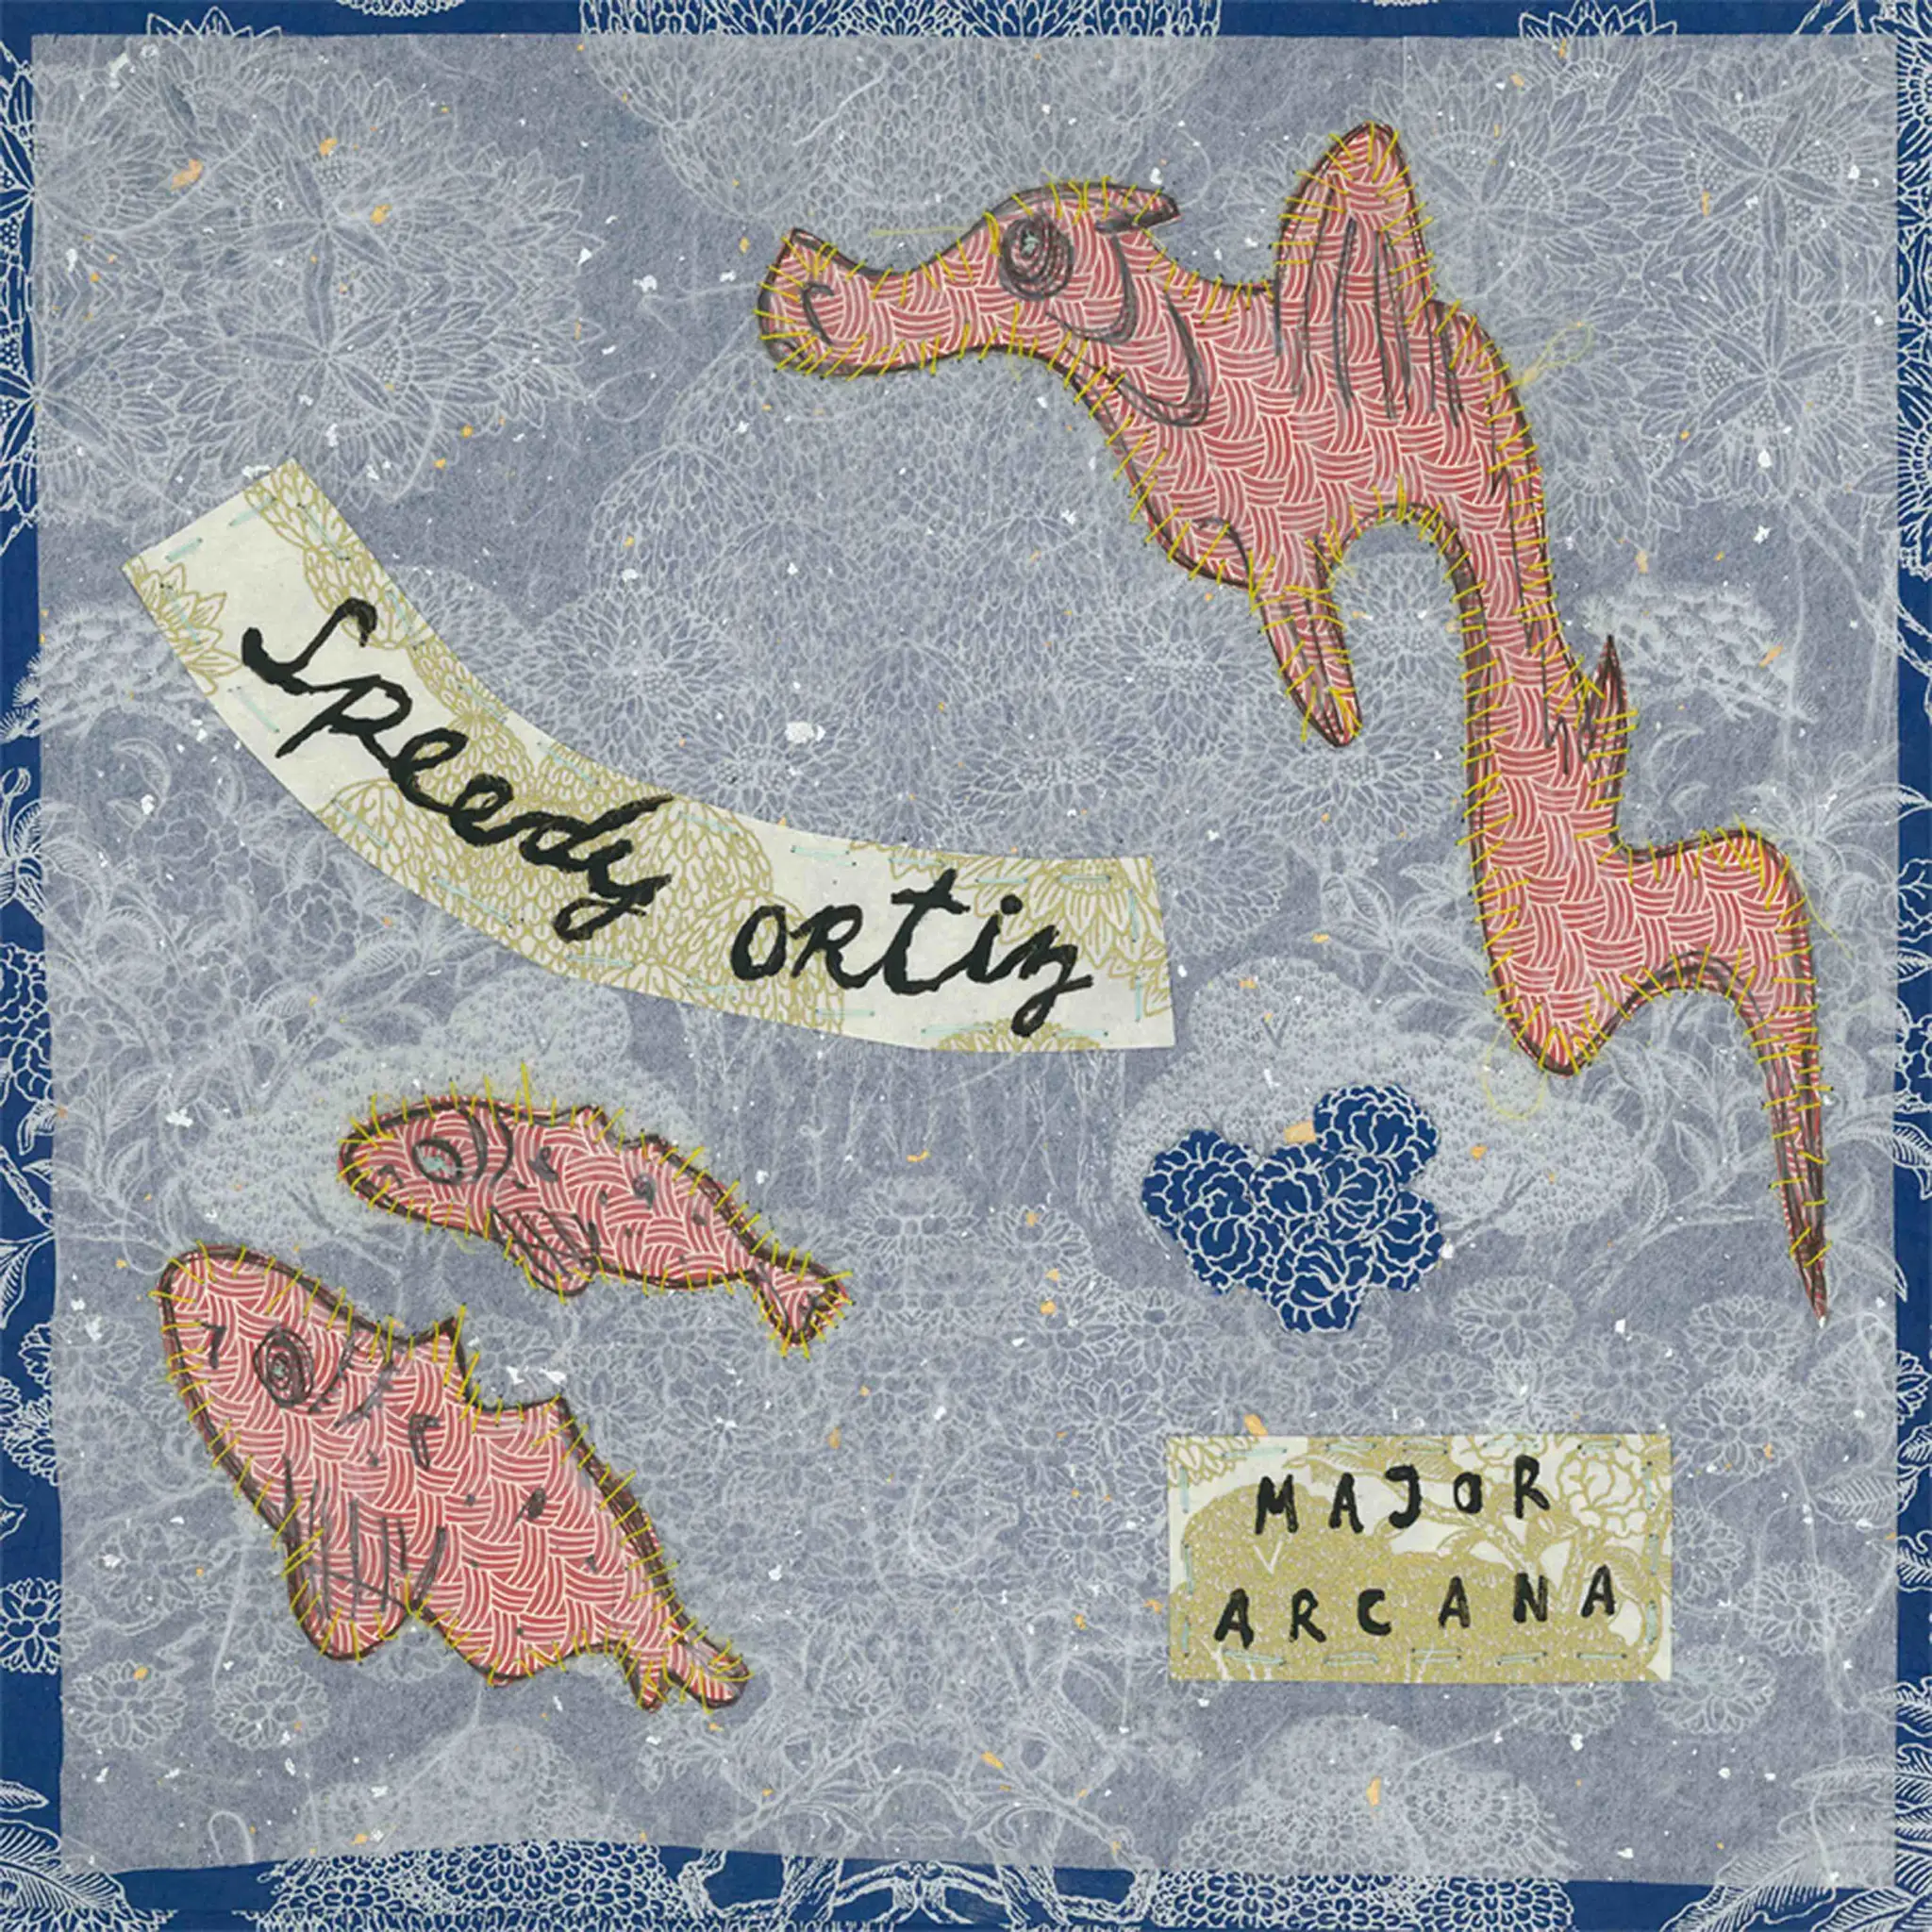 <strong>Speedy Ortiz - Major Arcana (10th Anniversary Edition)</strong> (Vinyl LP - clear)